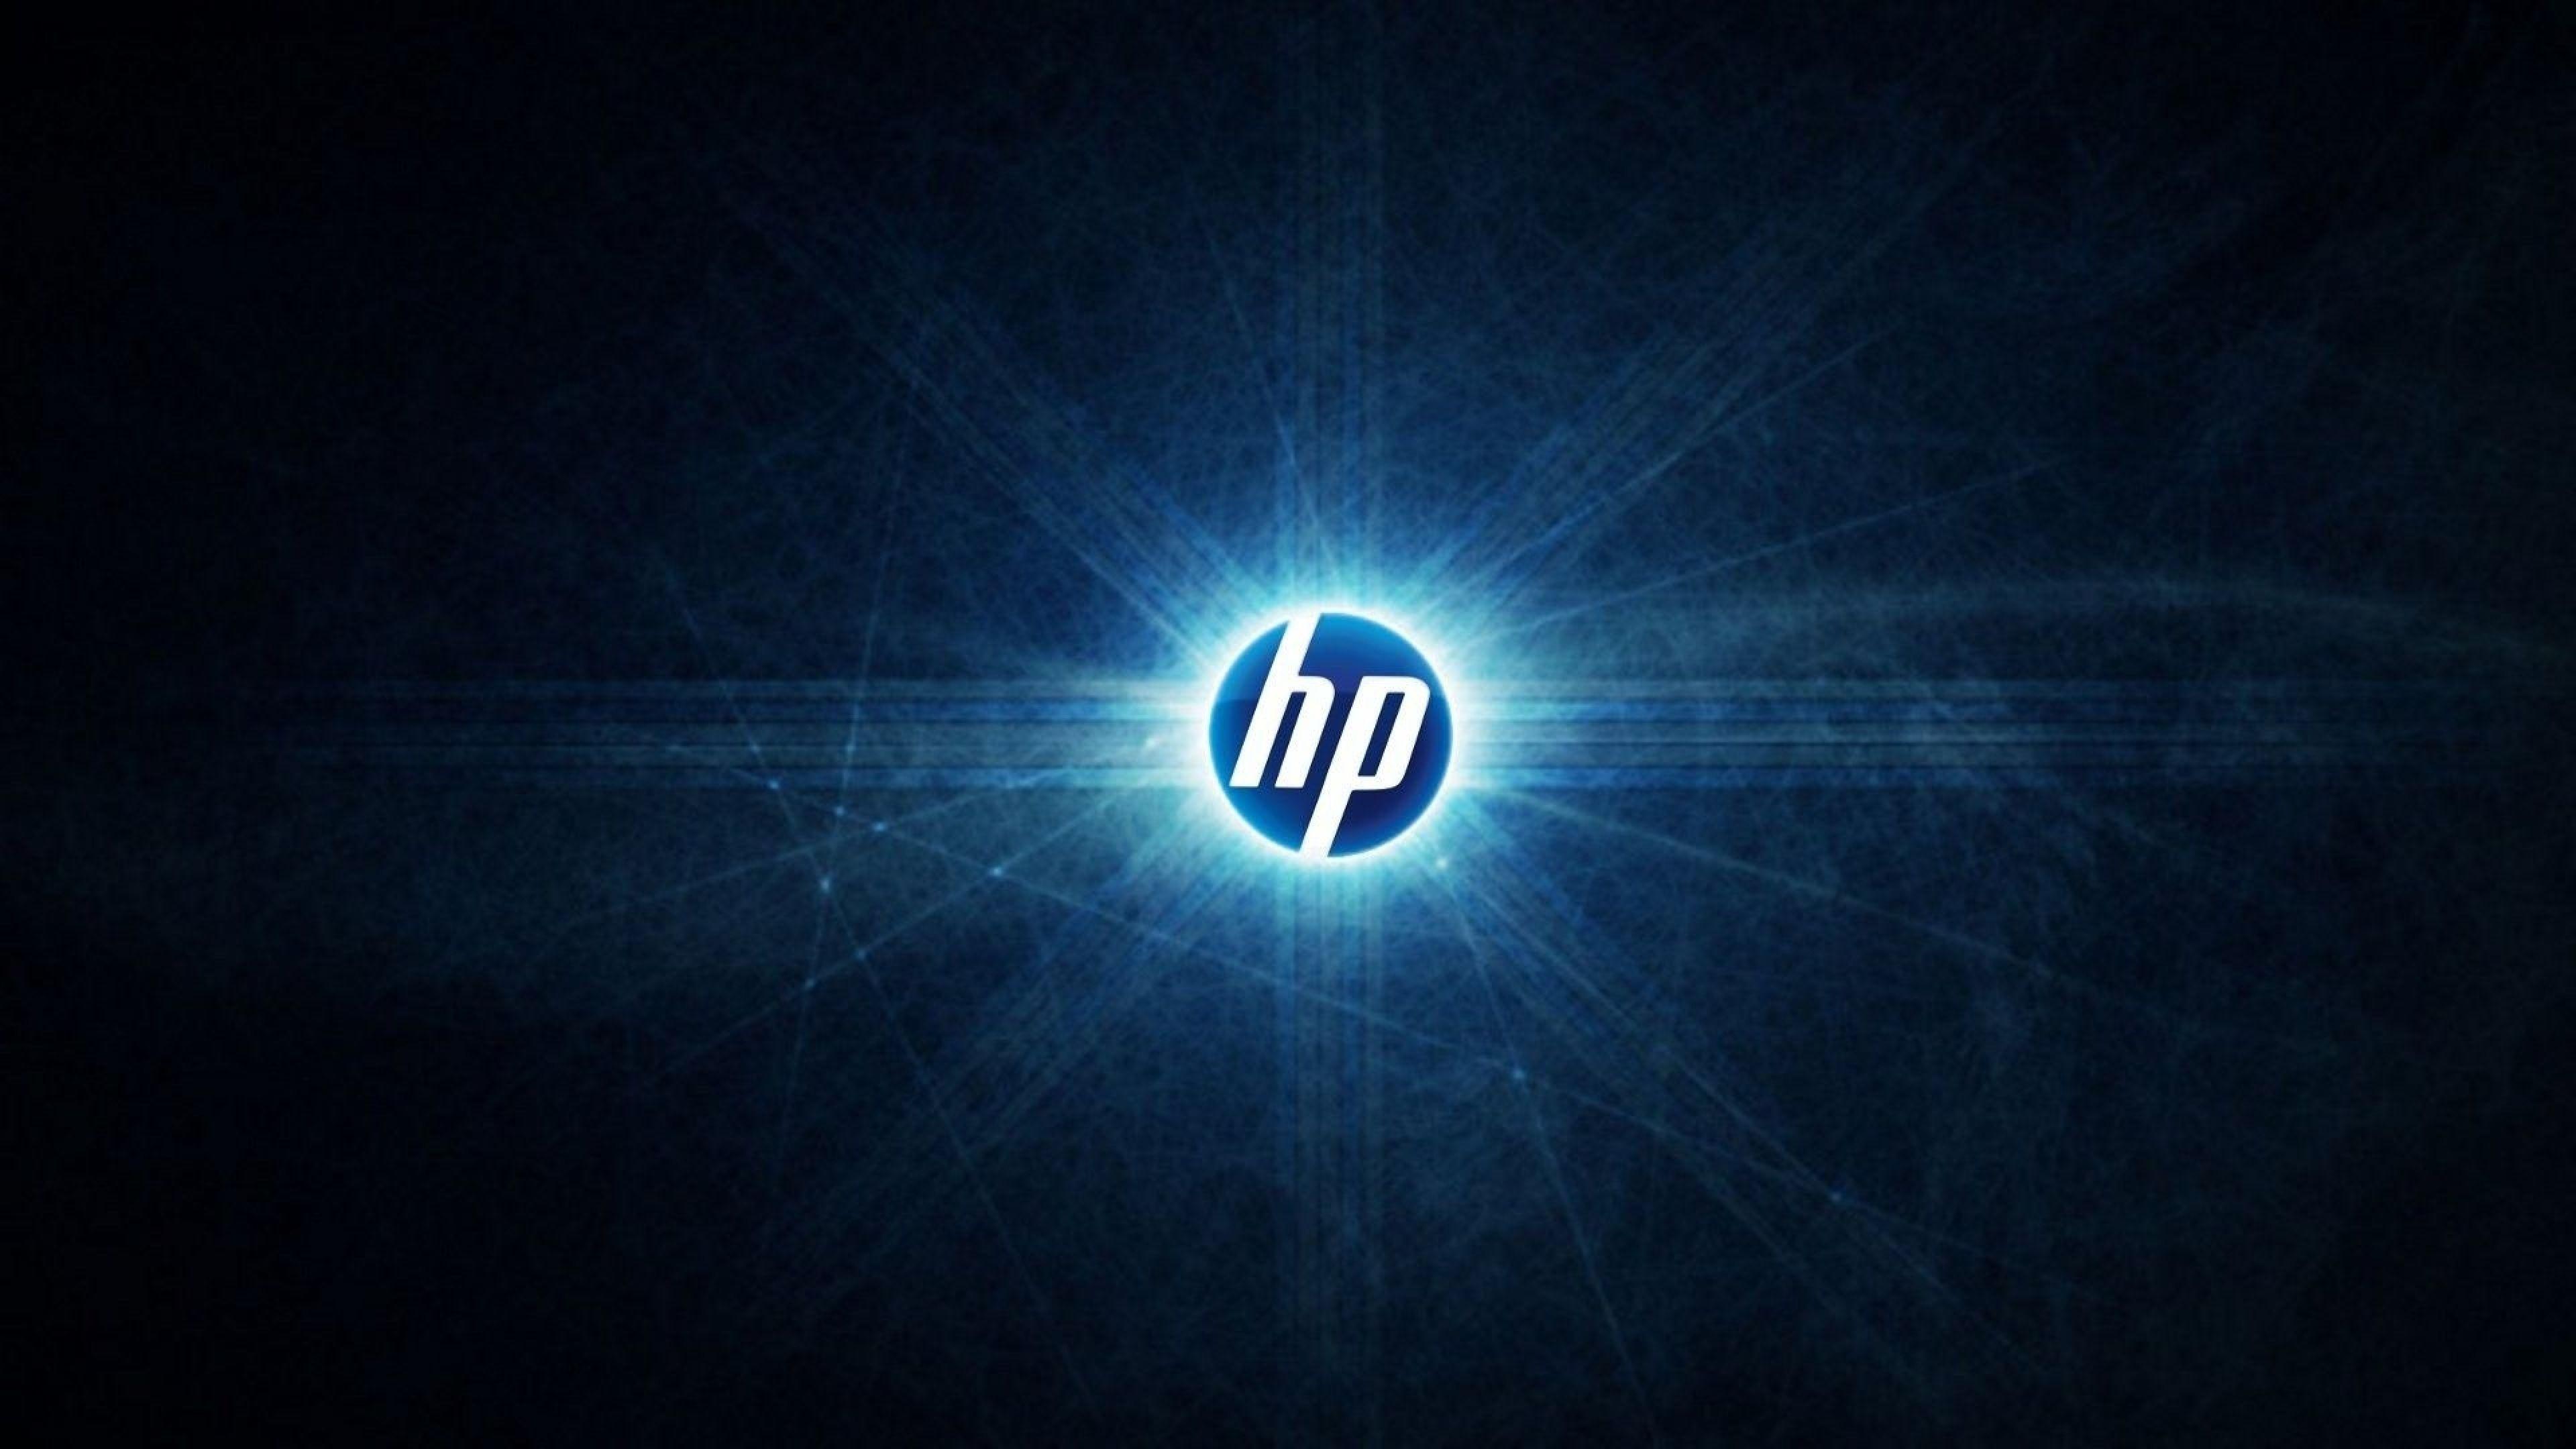 HP 4K Ultra HD Wallpapers - Top Free HP 4K Ultra HD Backgrounds 